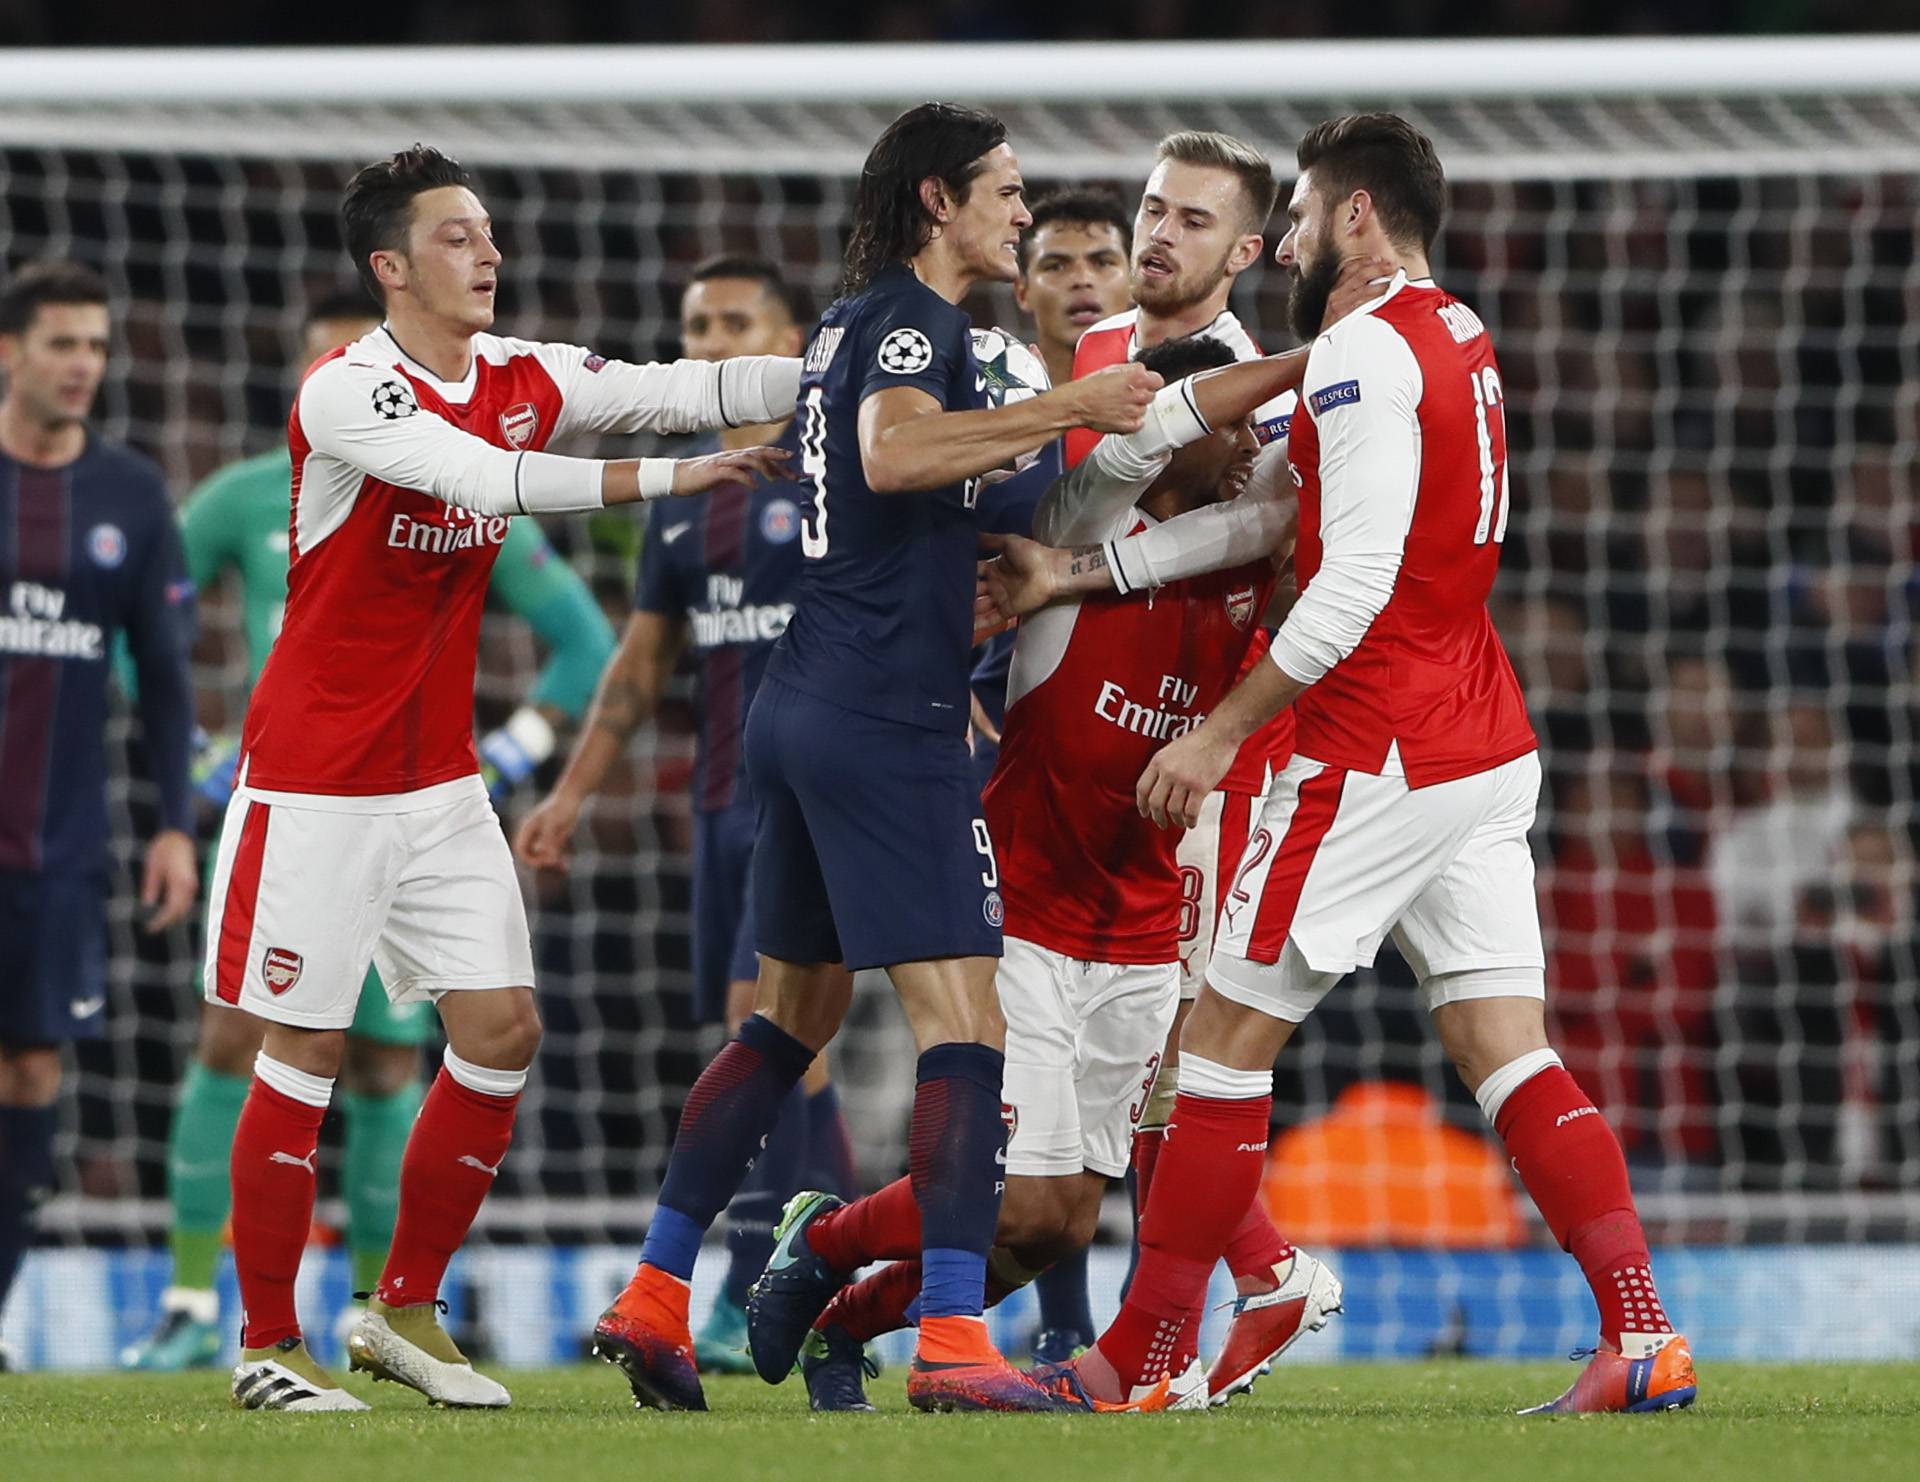 Paris Saint-Germain's Edinson Cavani clashes with Arsenal's Aaron Ramsey, Francis Coquelin and Olivier Giroud as Mesut Ozil looks on